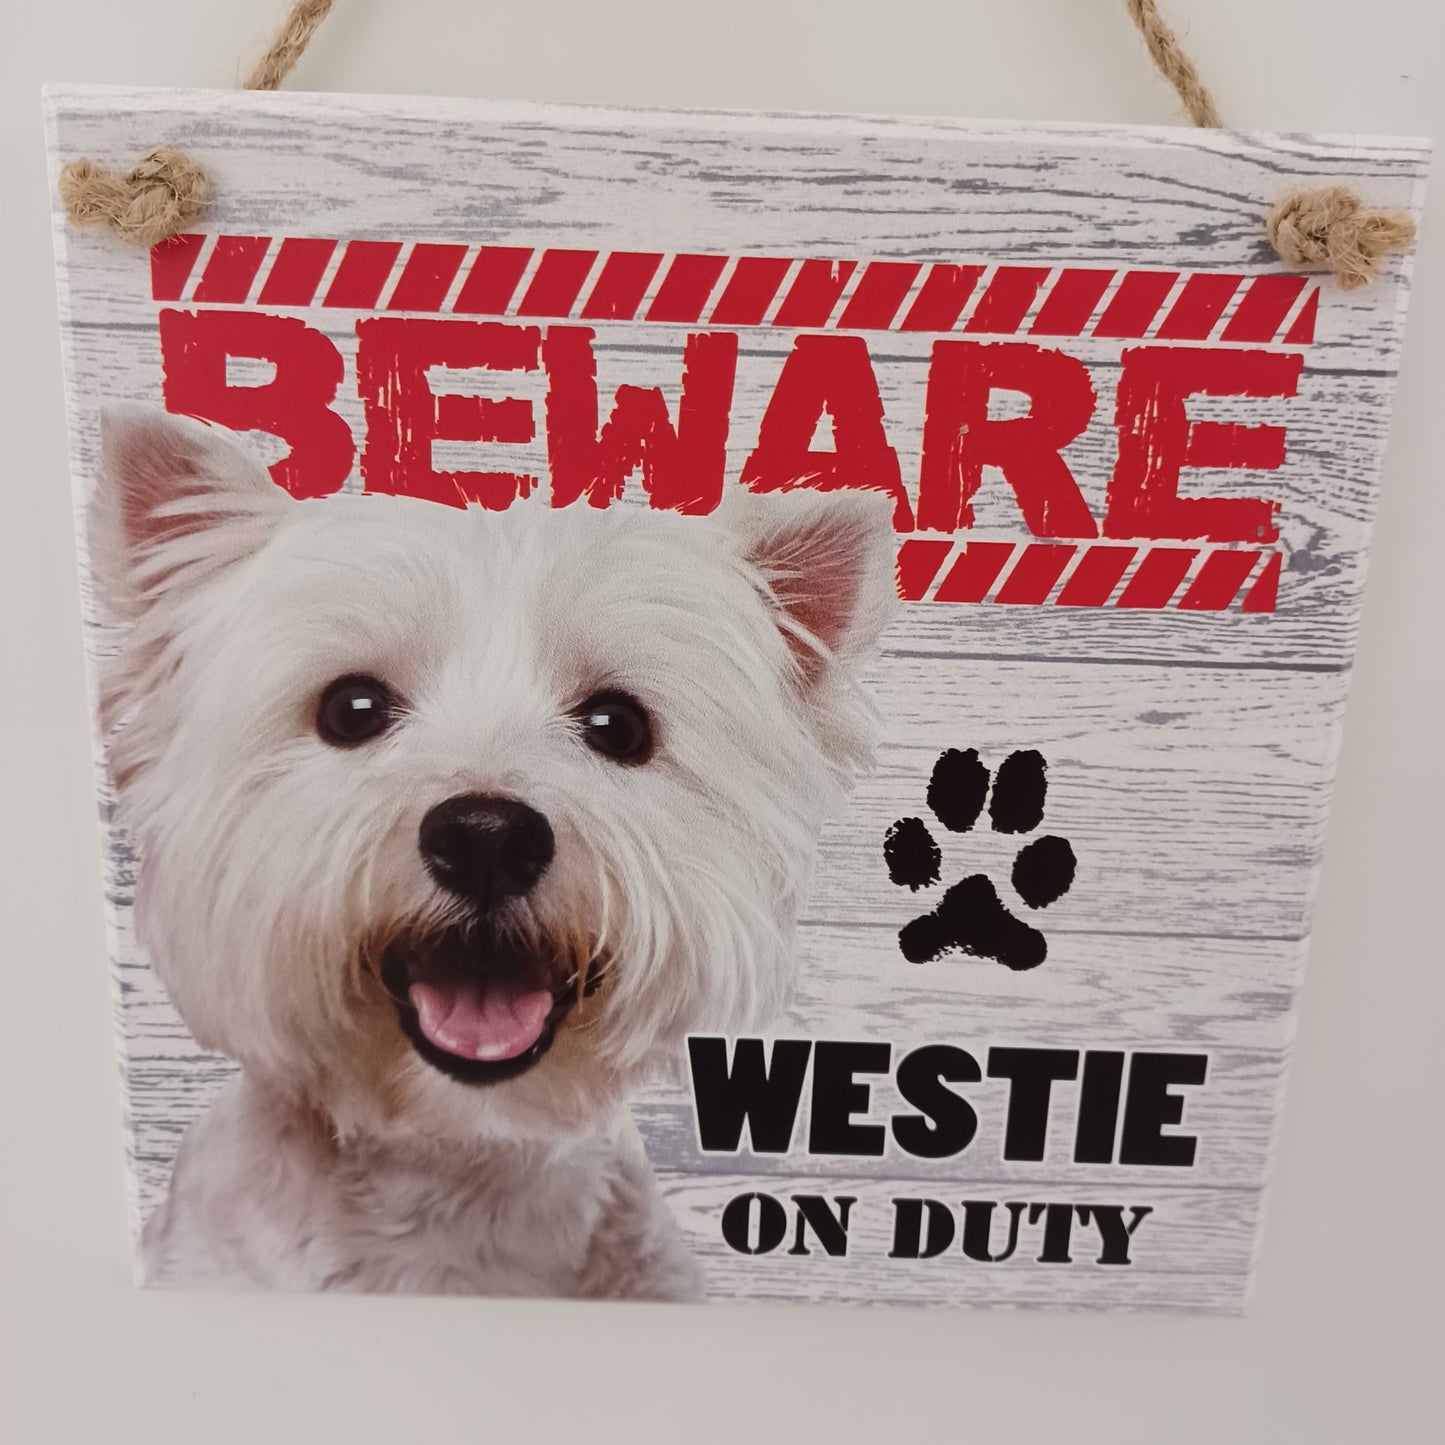 Beware Dog Plaque - West Highland Terrier